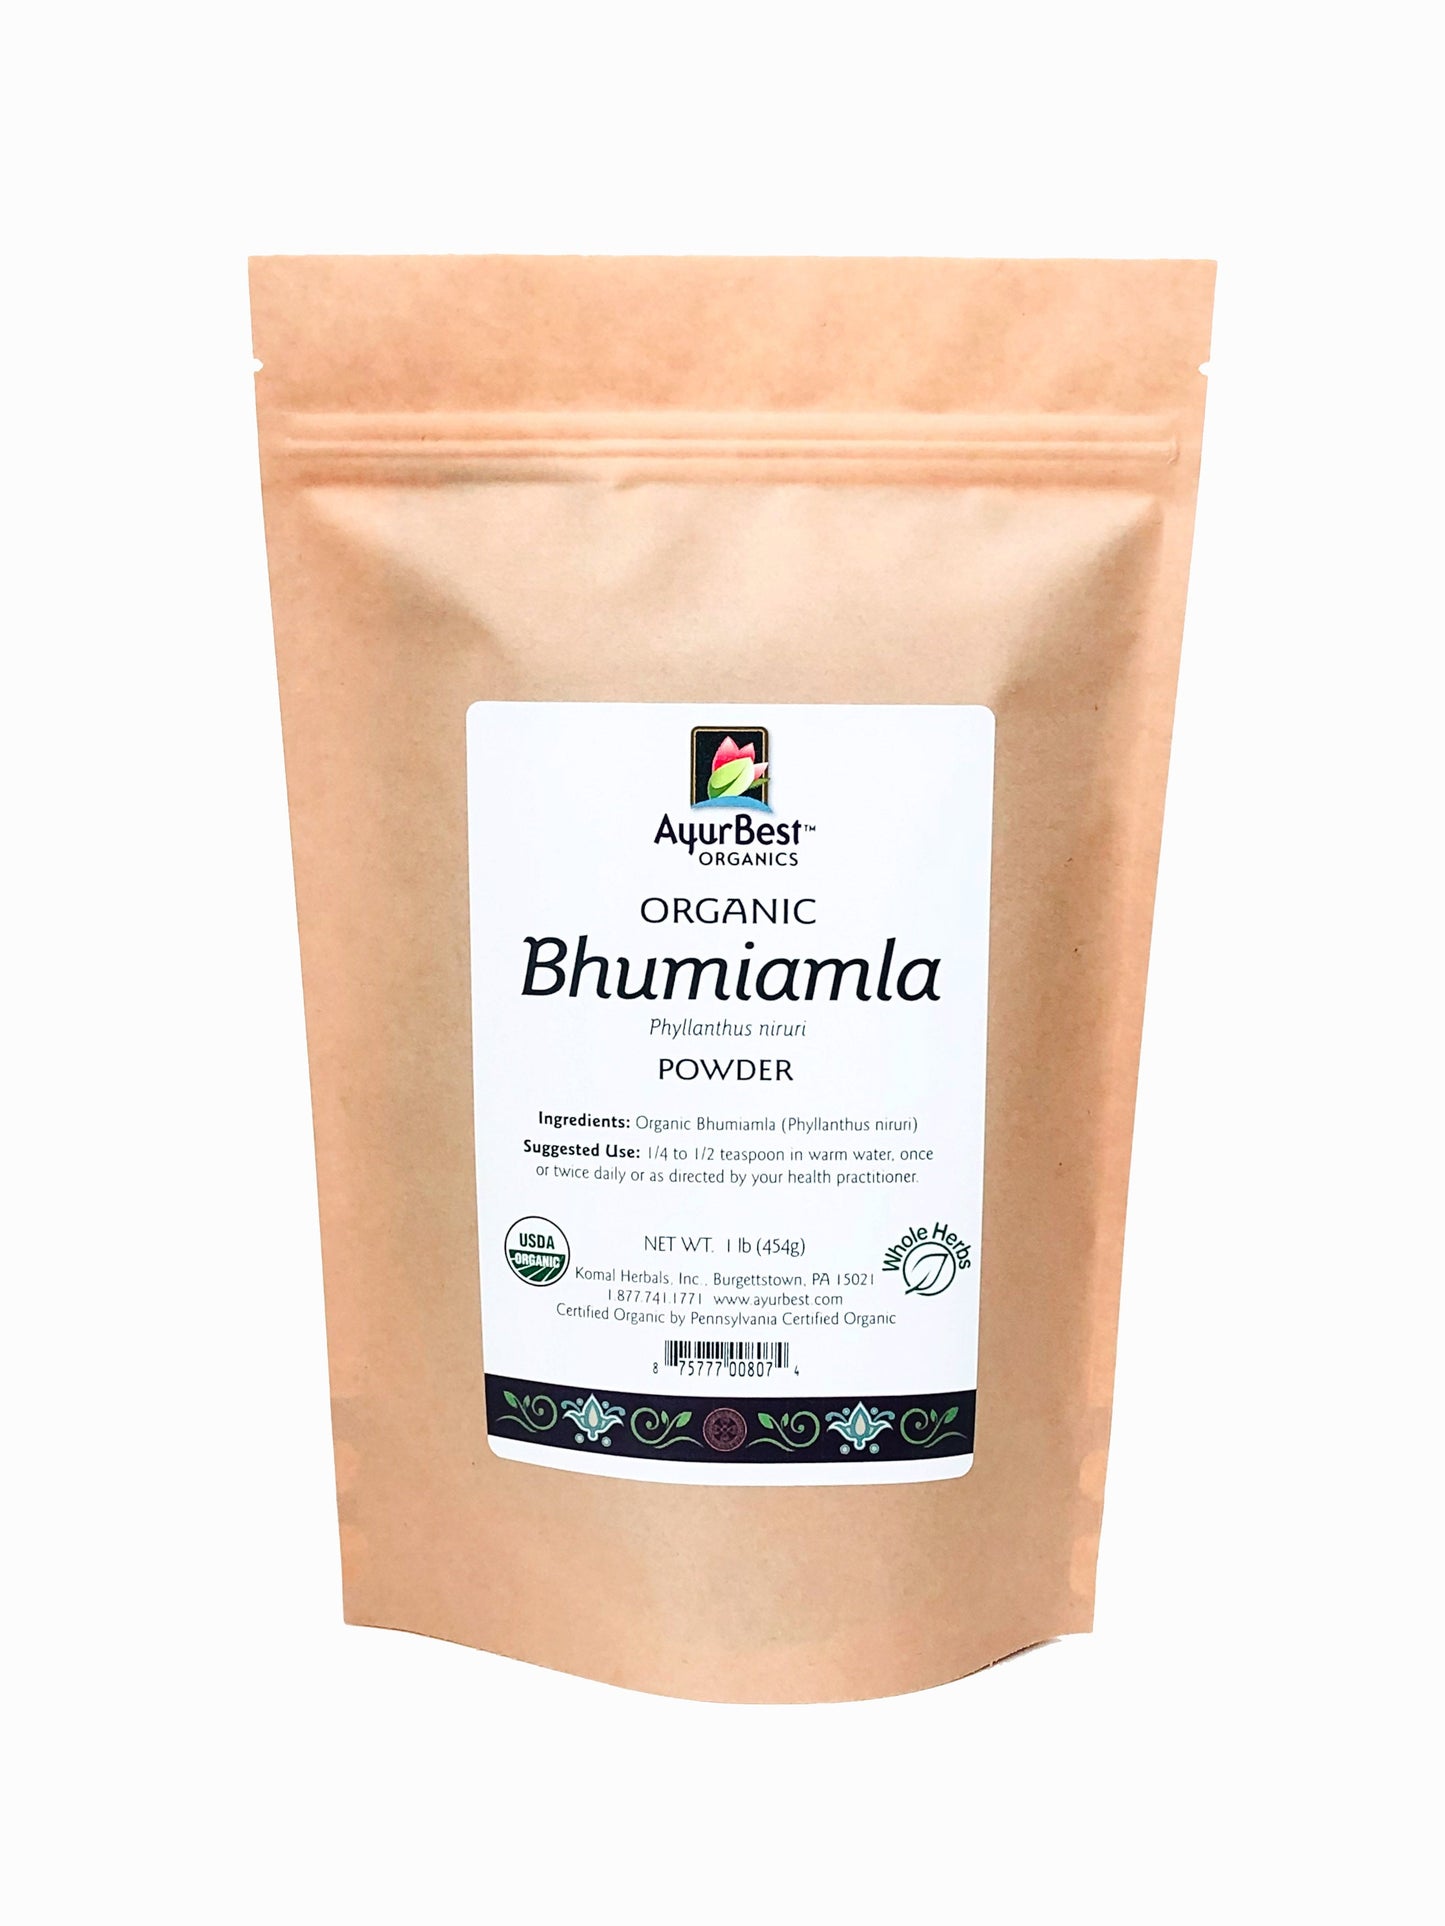 Wholesale Spices & Herbs - Bhumiamla Powder, Organic 1lb (454g) Bag